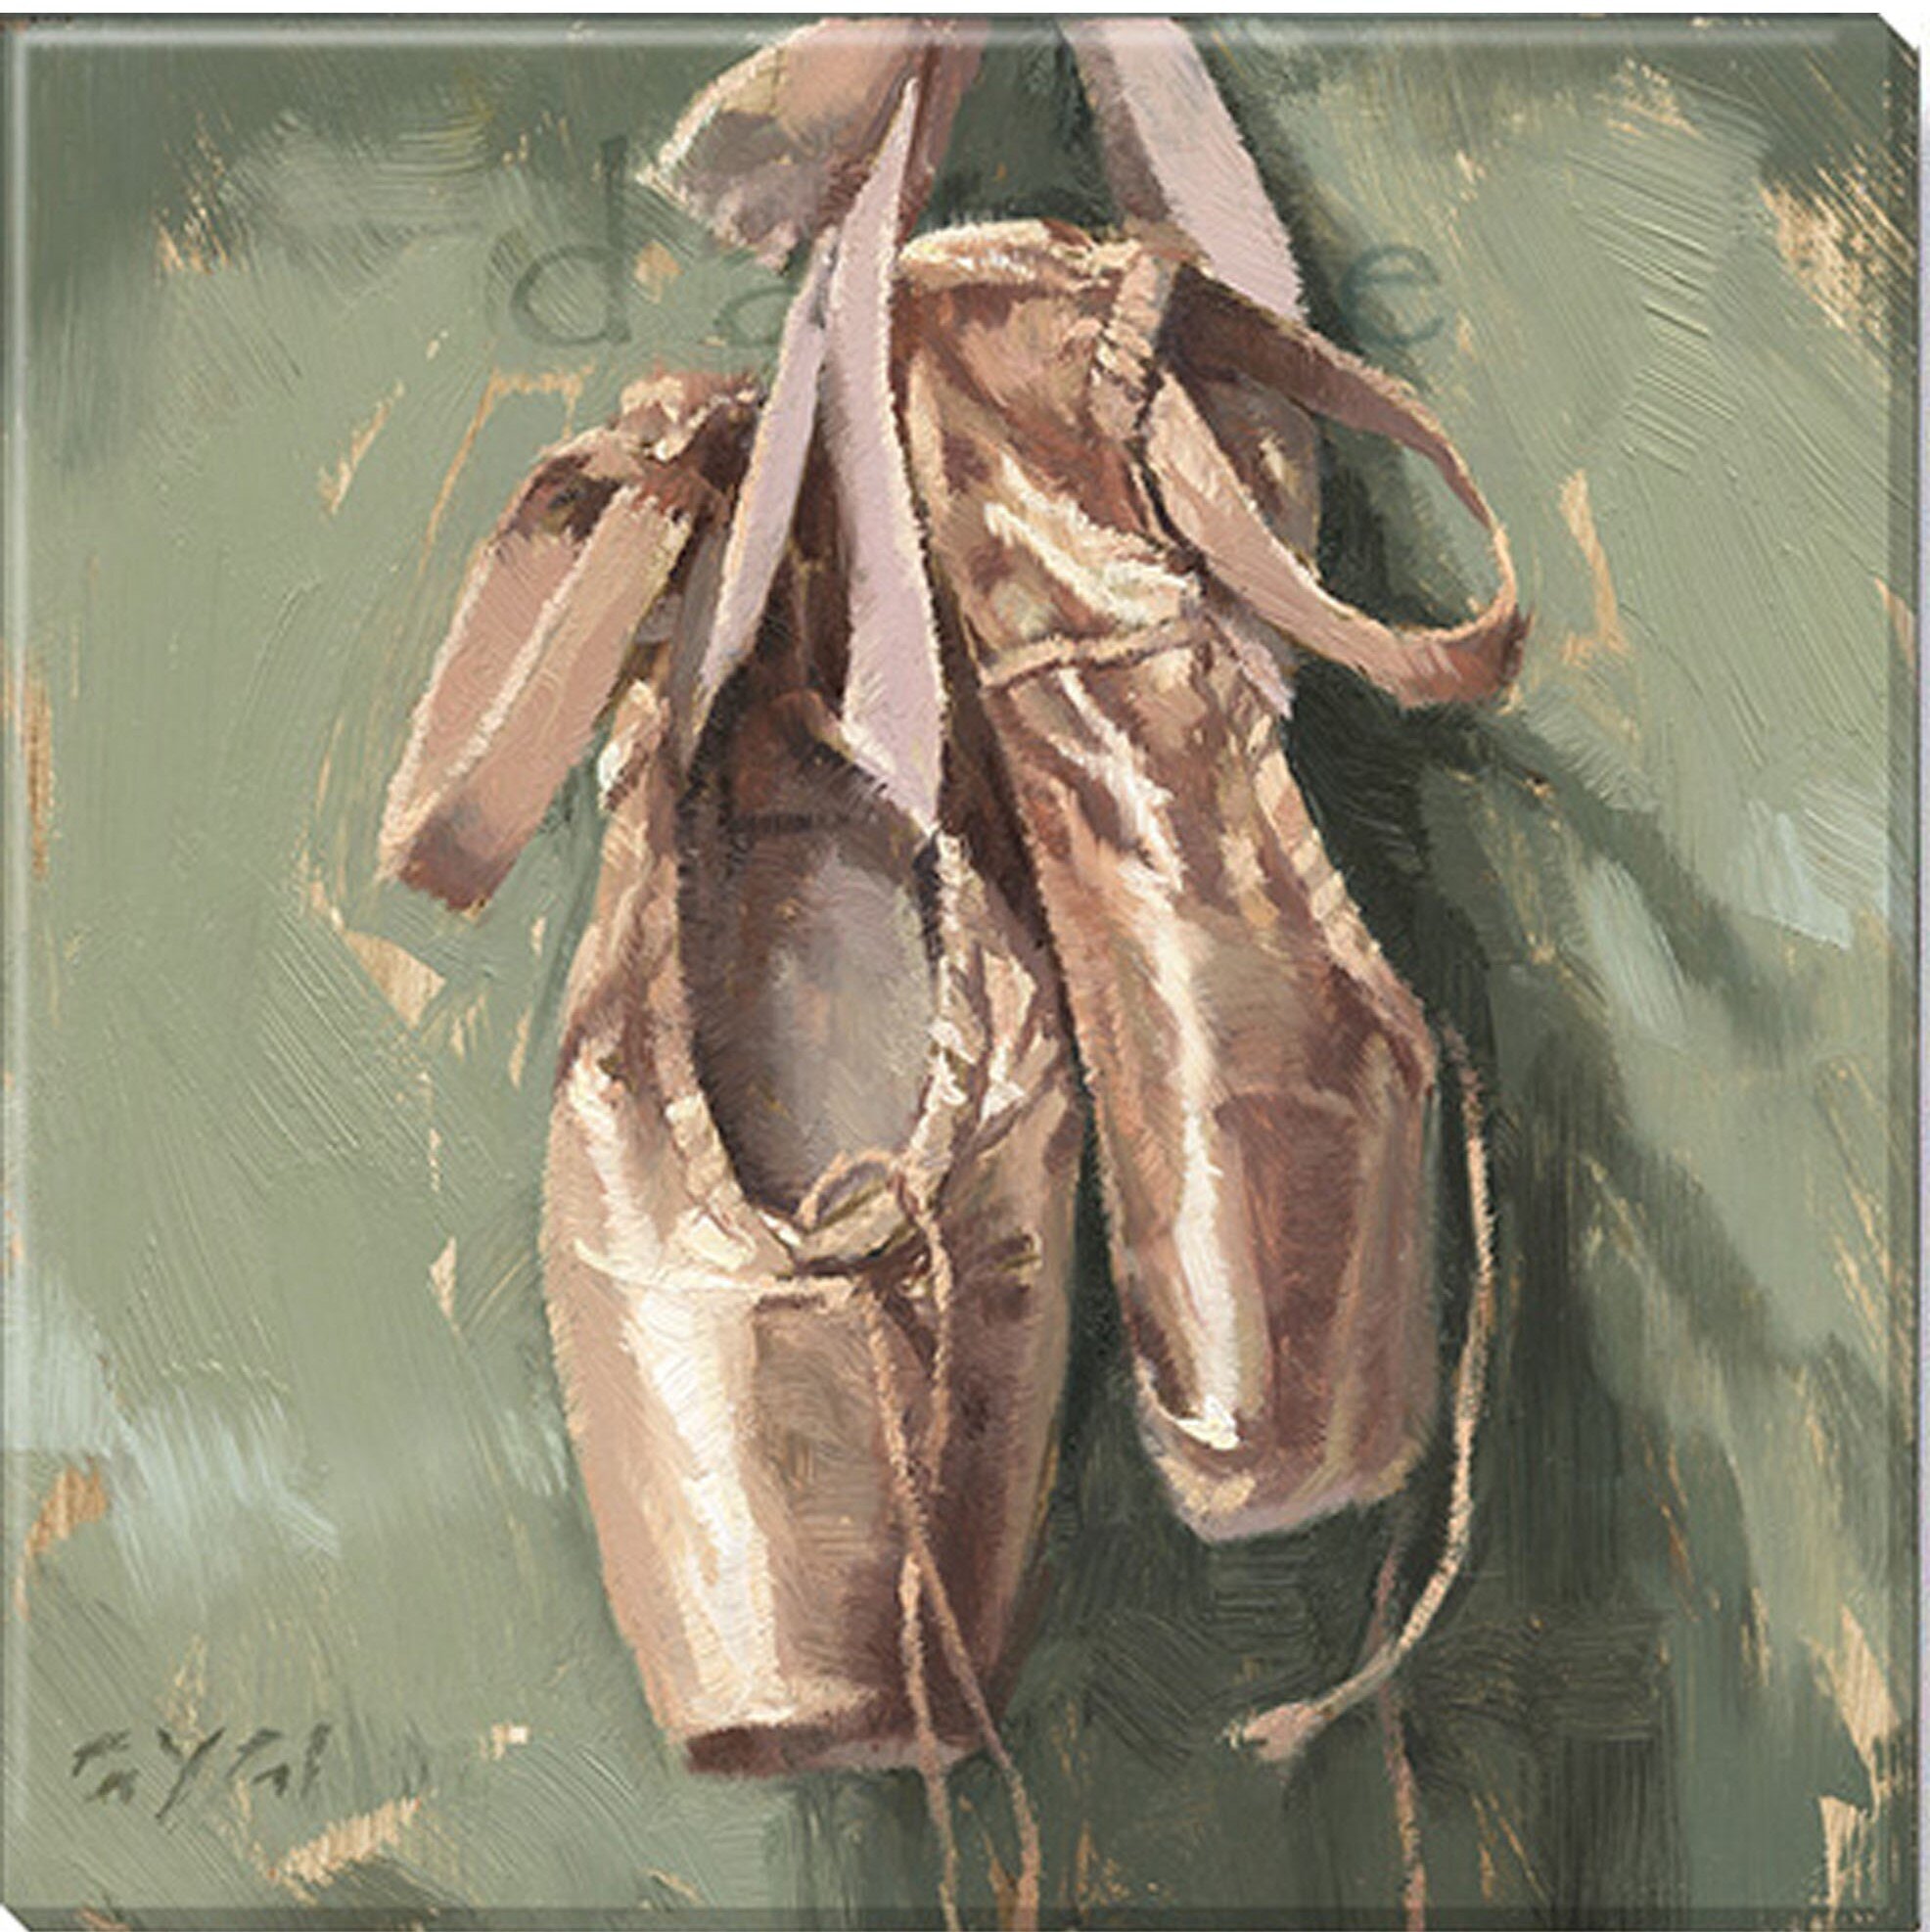 Women's Satin Ballet Rubber Pointe Shoes – DanceandSway